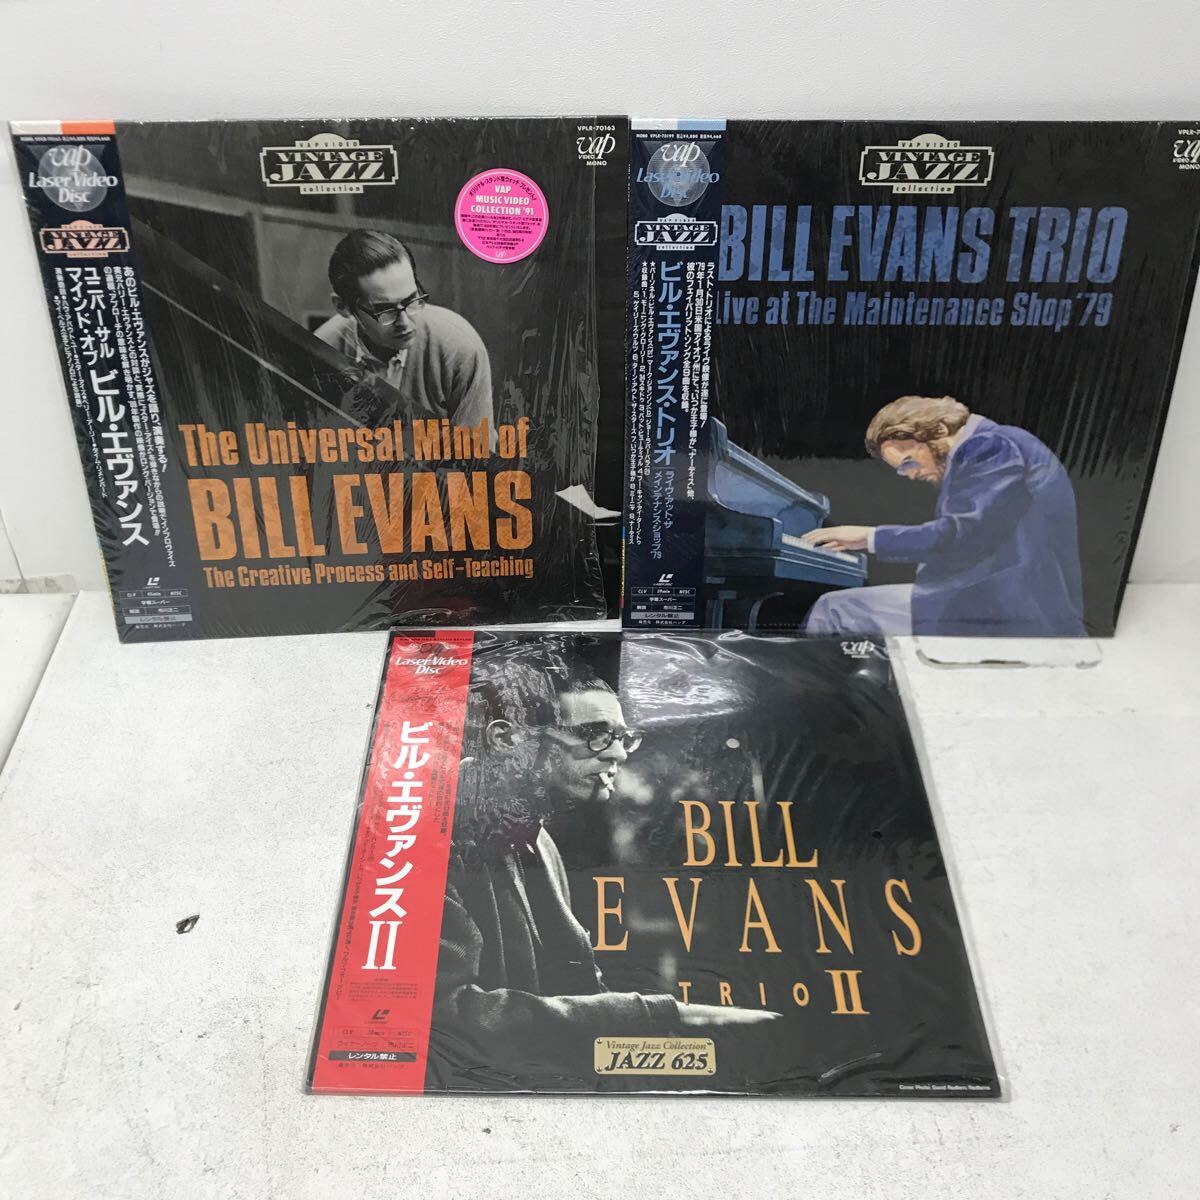 I0404G3 ビル・エヴァンス BIILL EVANS LD レーザーディスク 3巻セット ジャズ JAZZ 音楽 / ユニバーサル マインド・オブ VAP バップの画像1